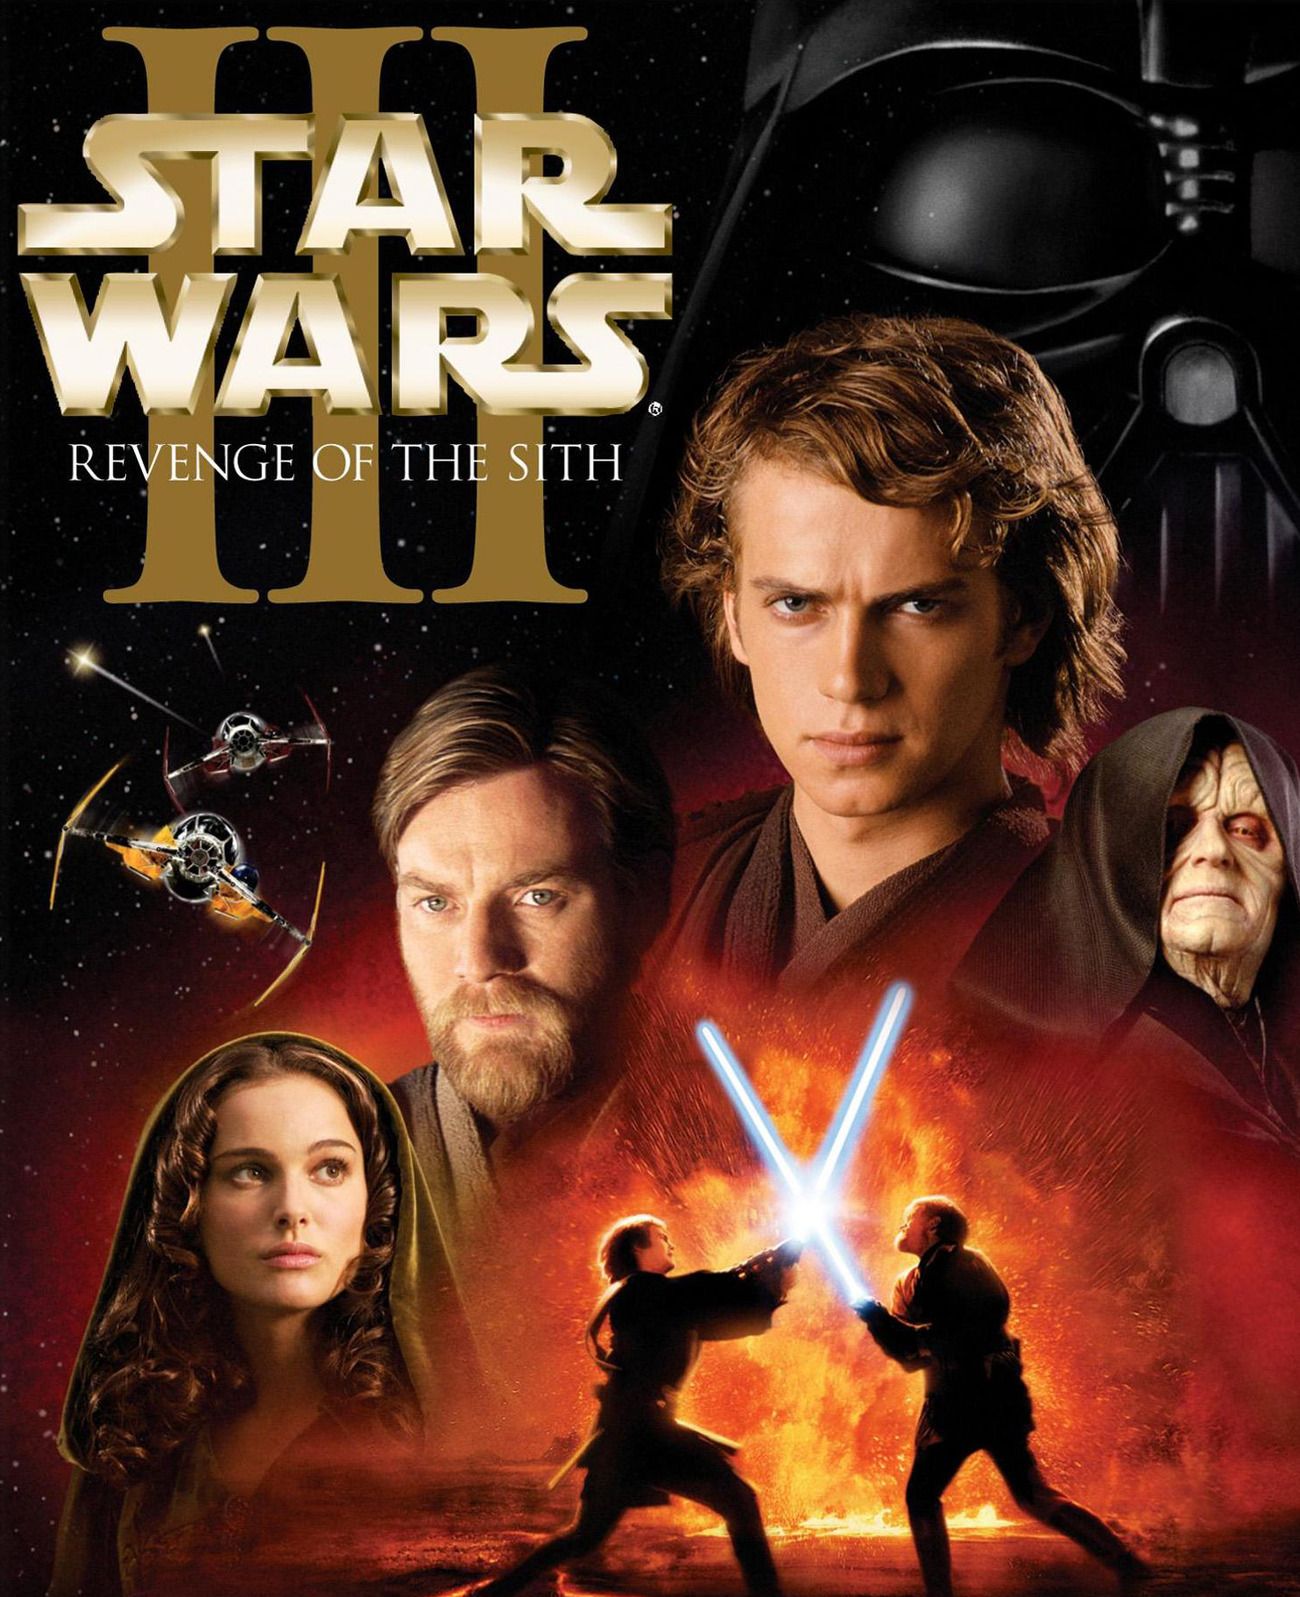 Star Wars Episode III: Revenge Of The Sith wallpaper, Movie, HQ Star Wars Episode III: Revenge Of The Sith pictureK Wallpaper 2019